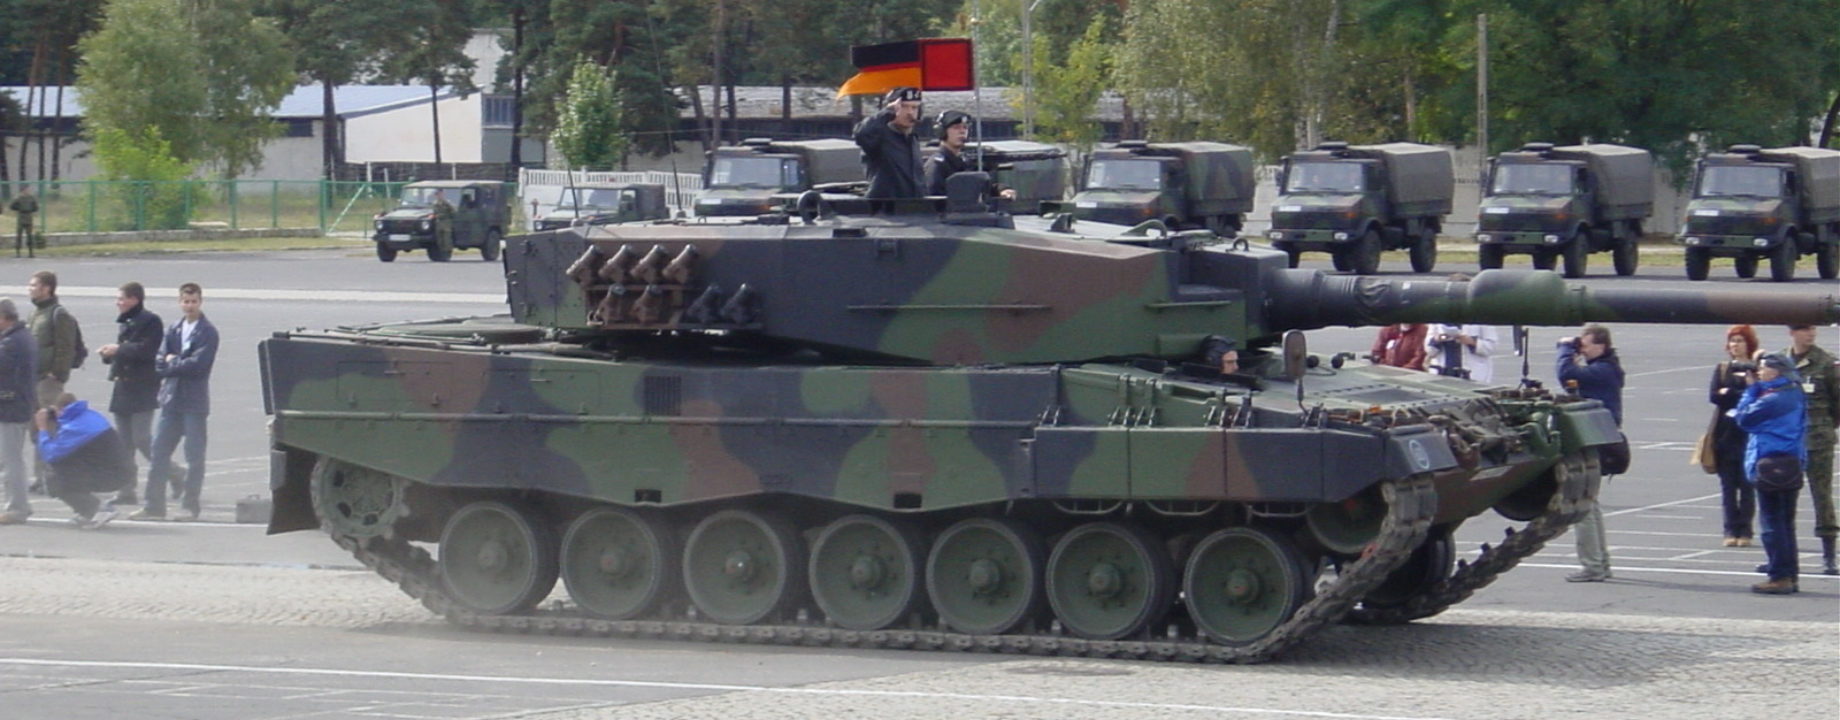 Polish Leopard2 A4